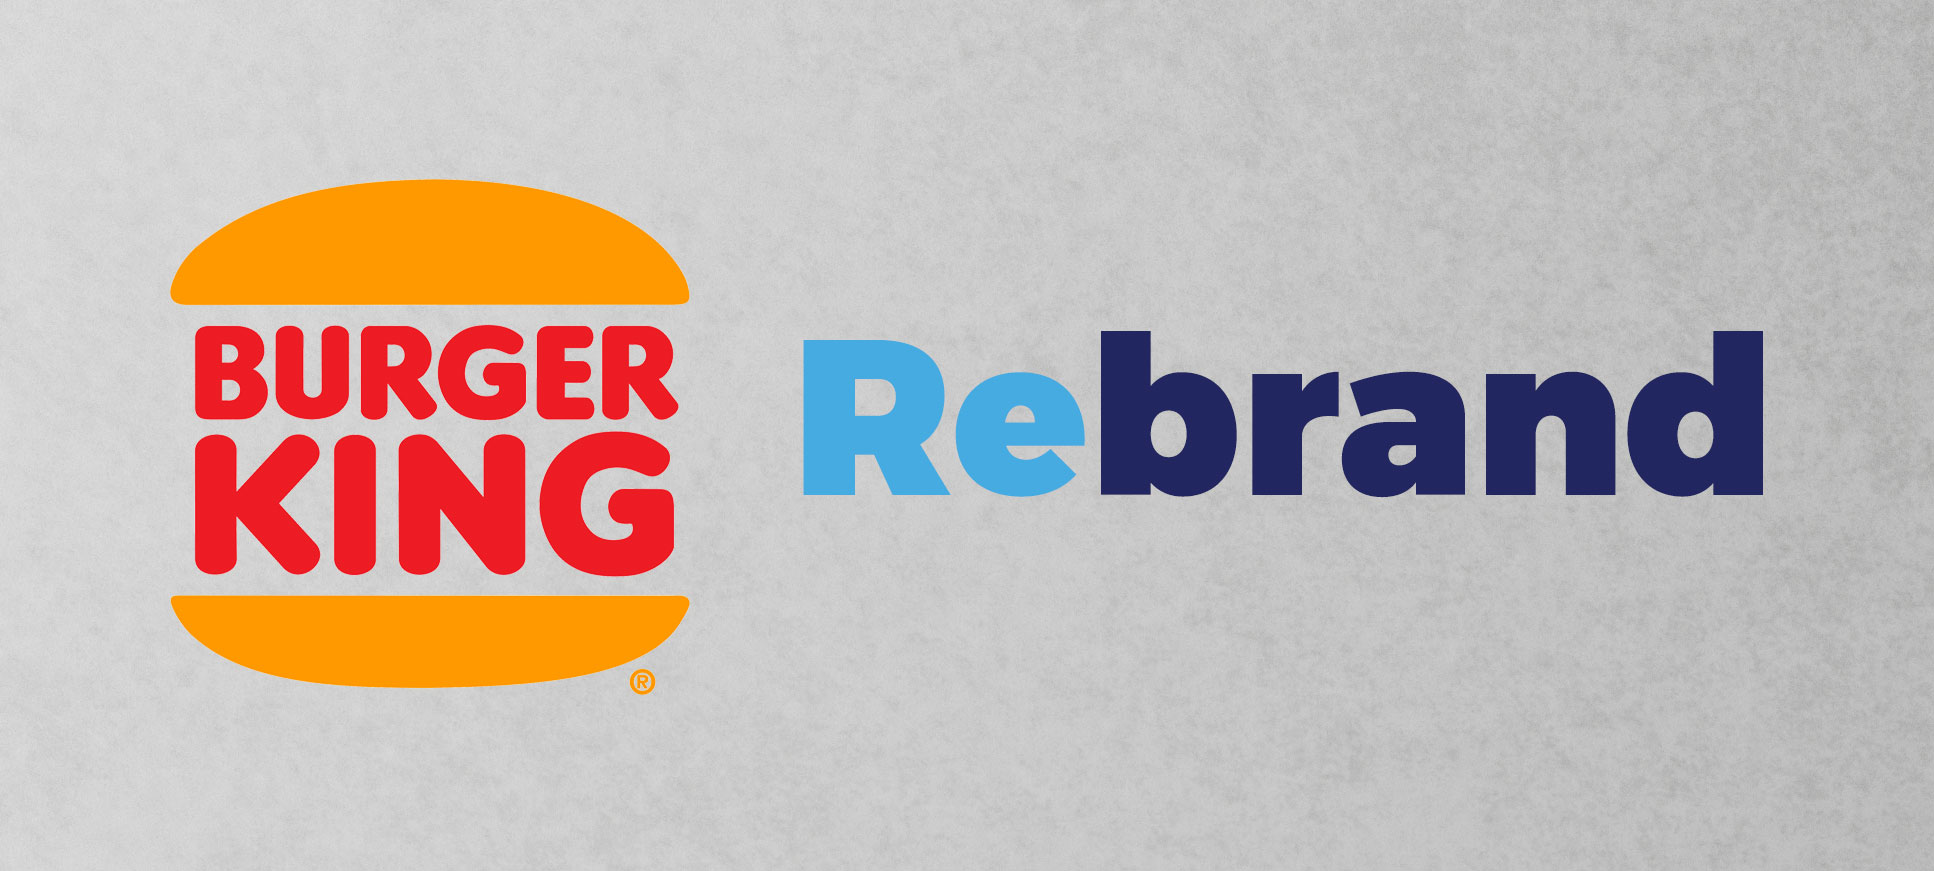 burger king rebrand banner